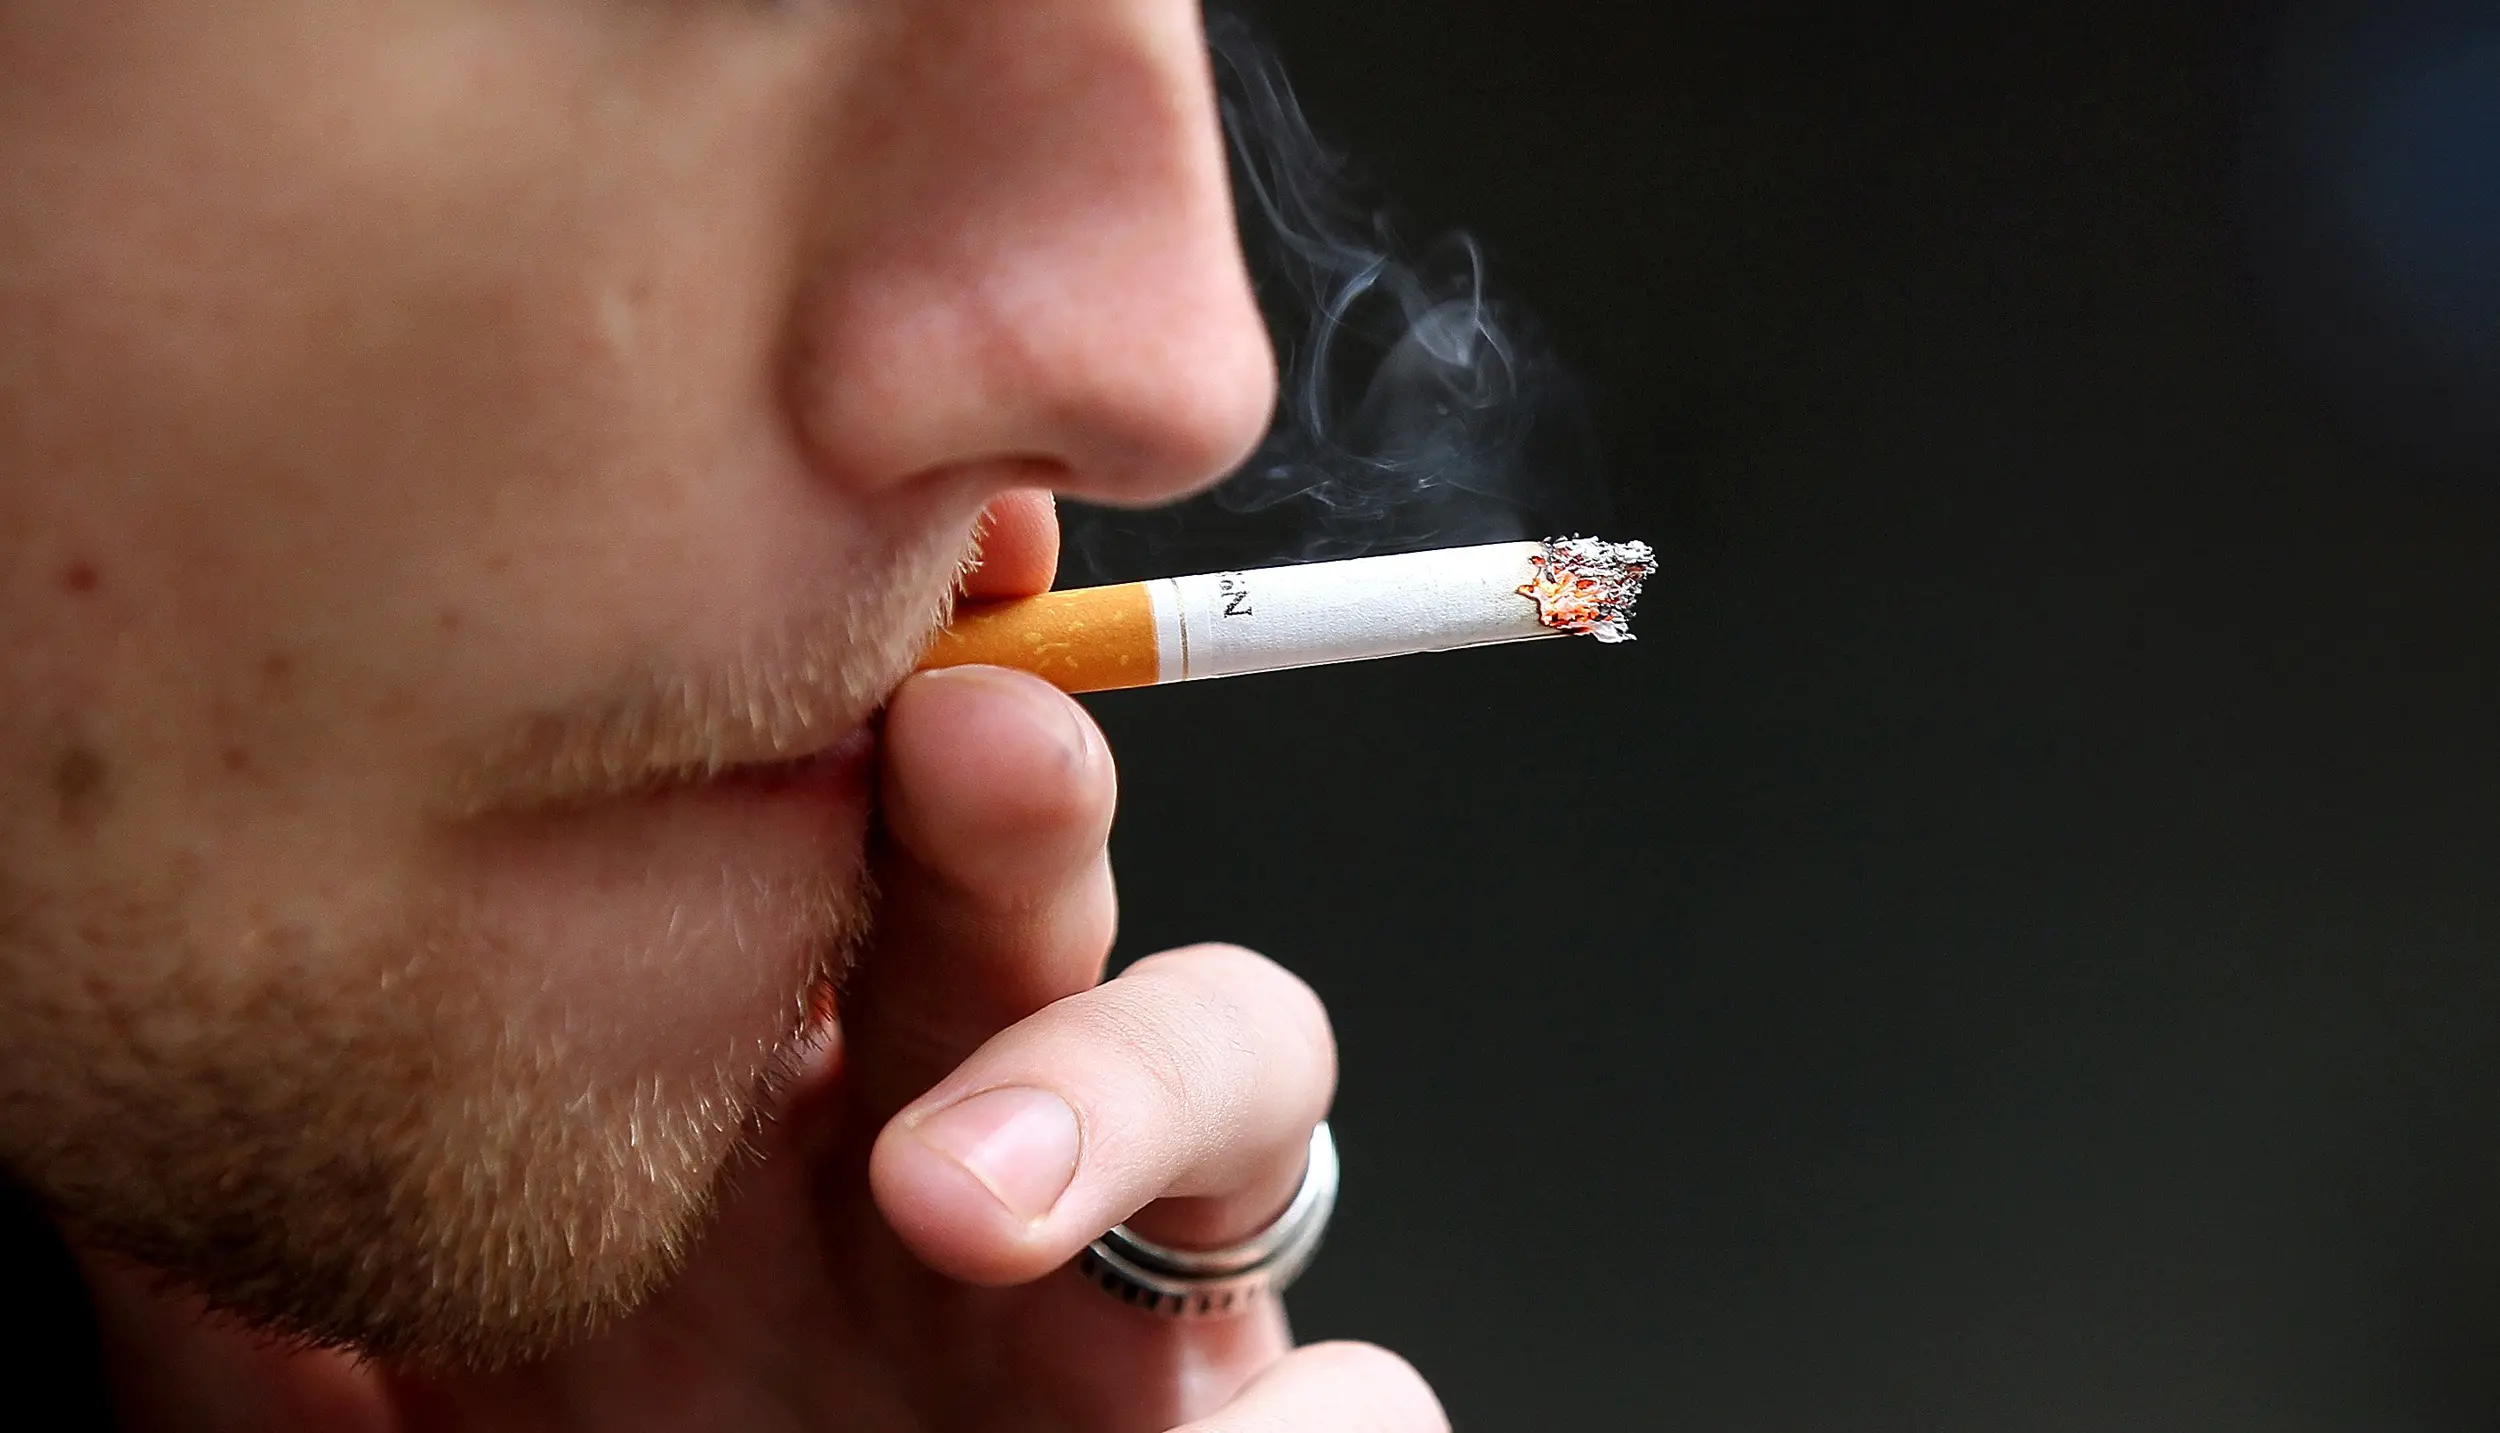 cigarette being smoked - Why do cigarette smokers smoke